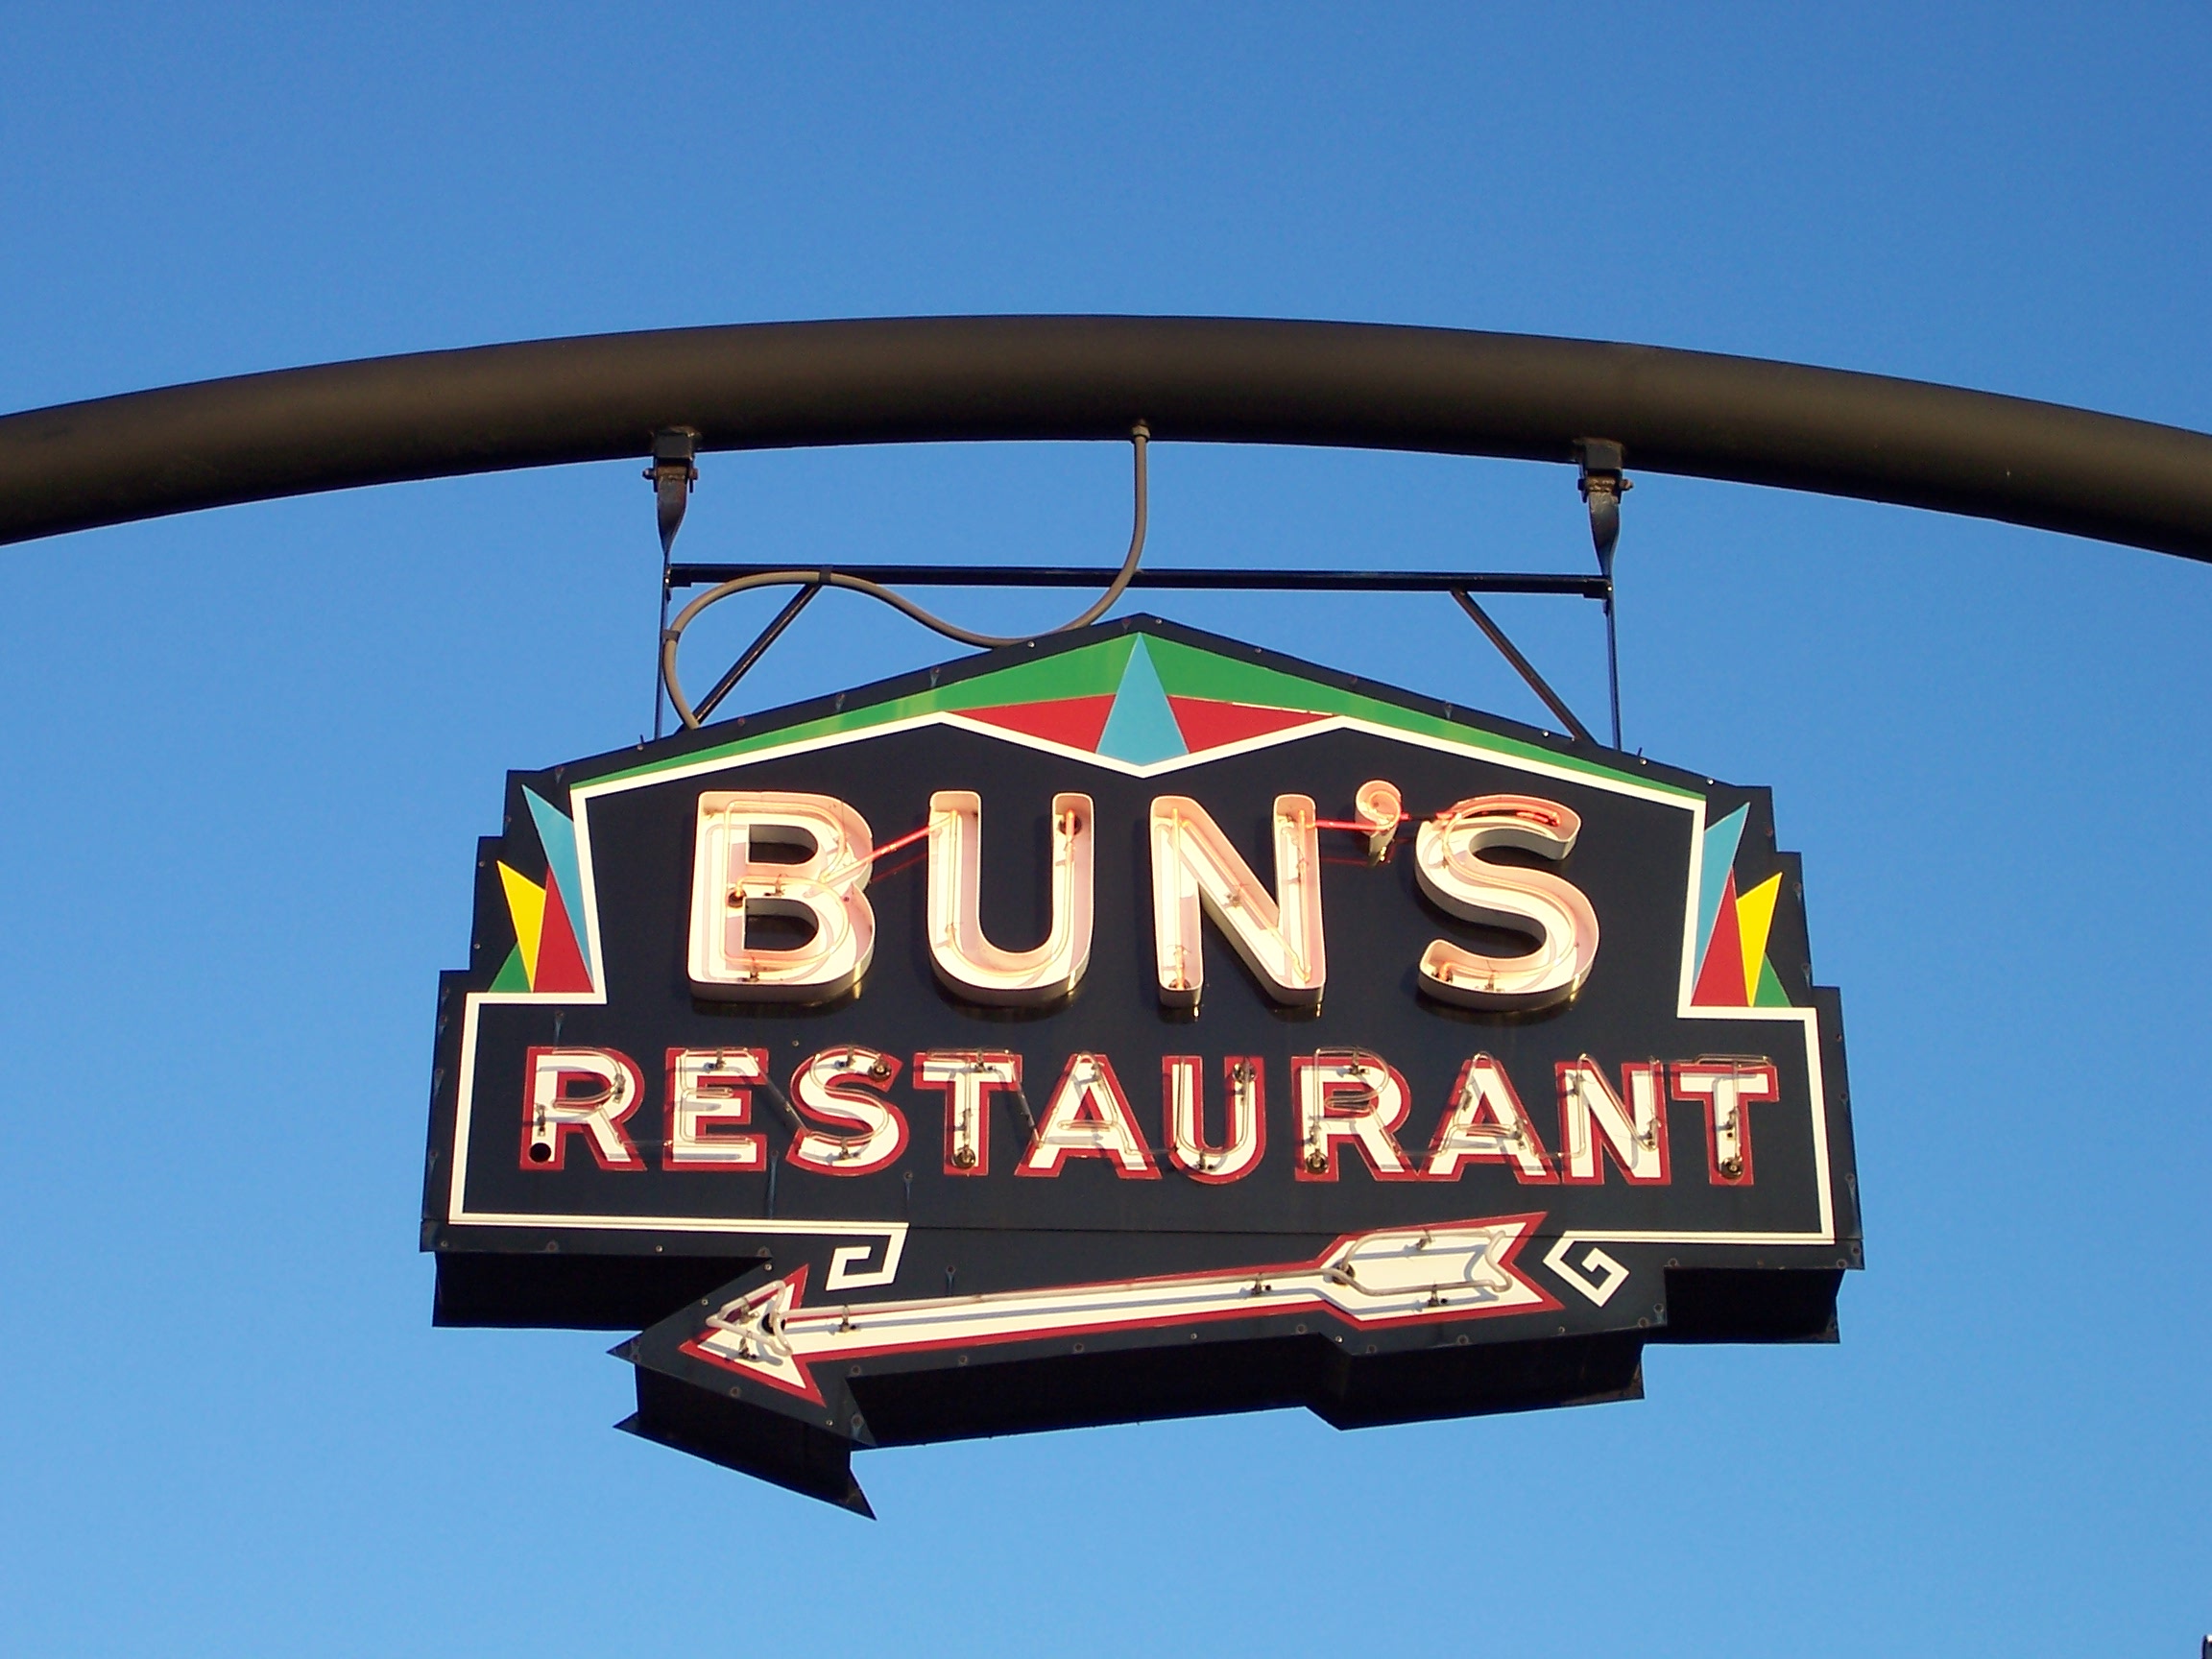 Bun's Restaurant - 14 West Winter Street, Delaware, Ohio U.S.A. - February 9, 2008